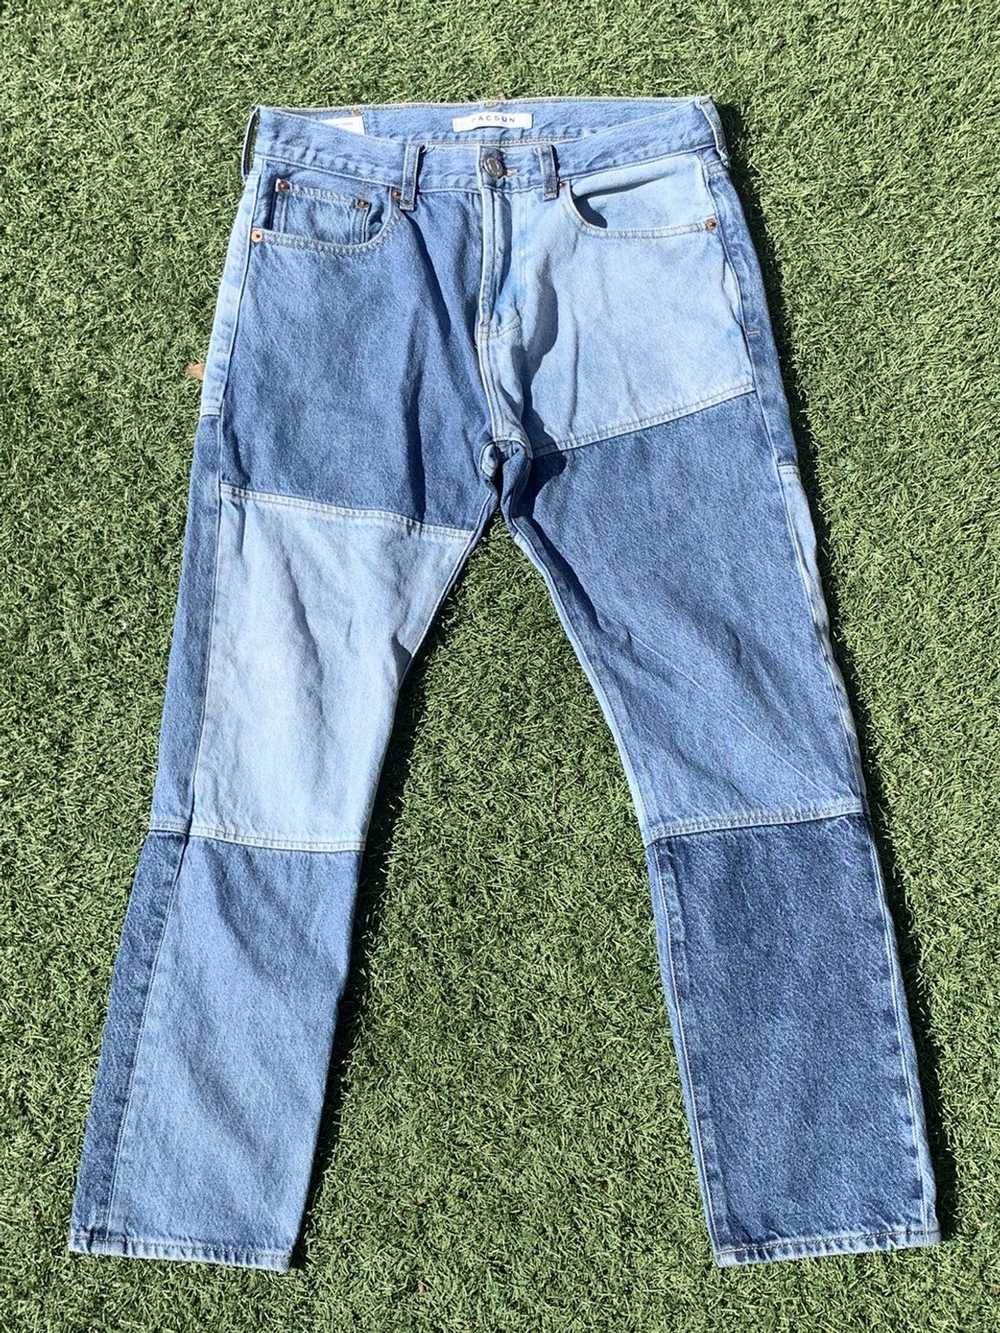 Pacsun Colorblock Jeans Slim Taper - image 2